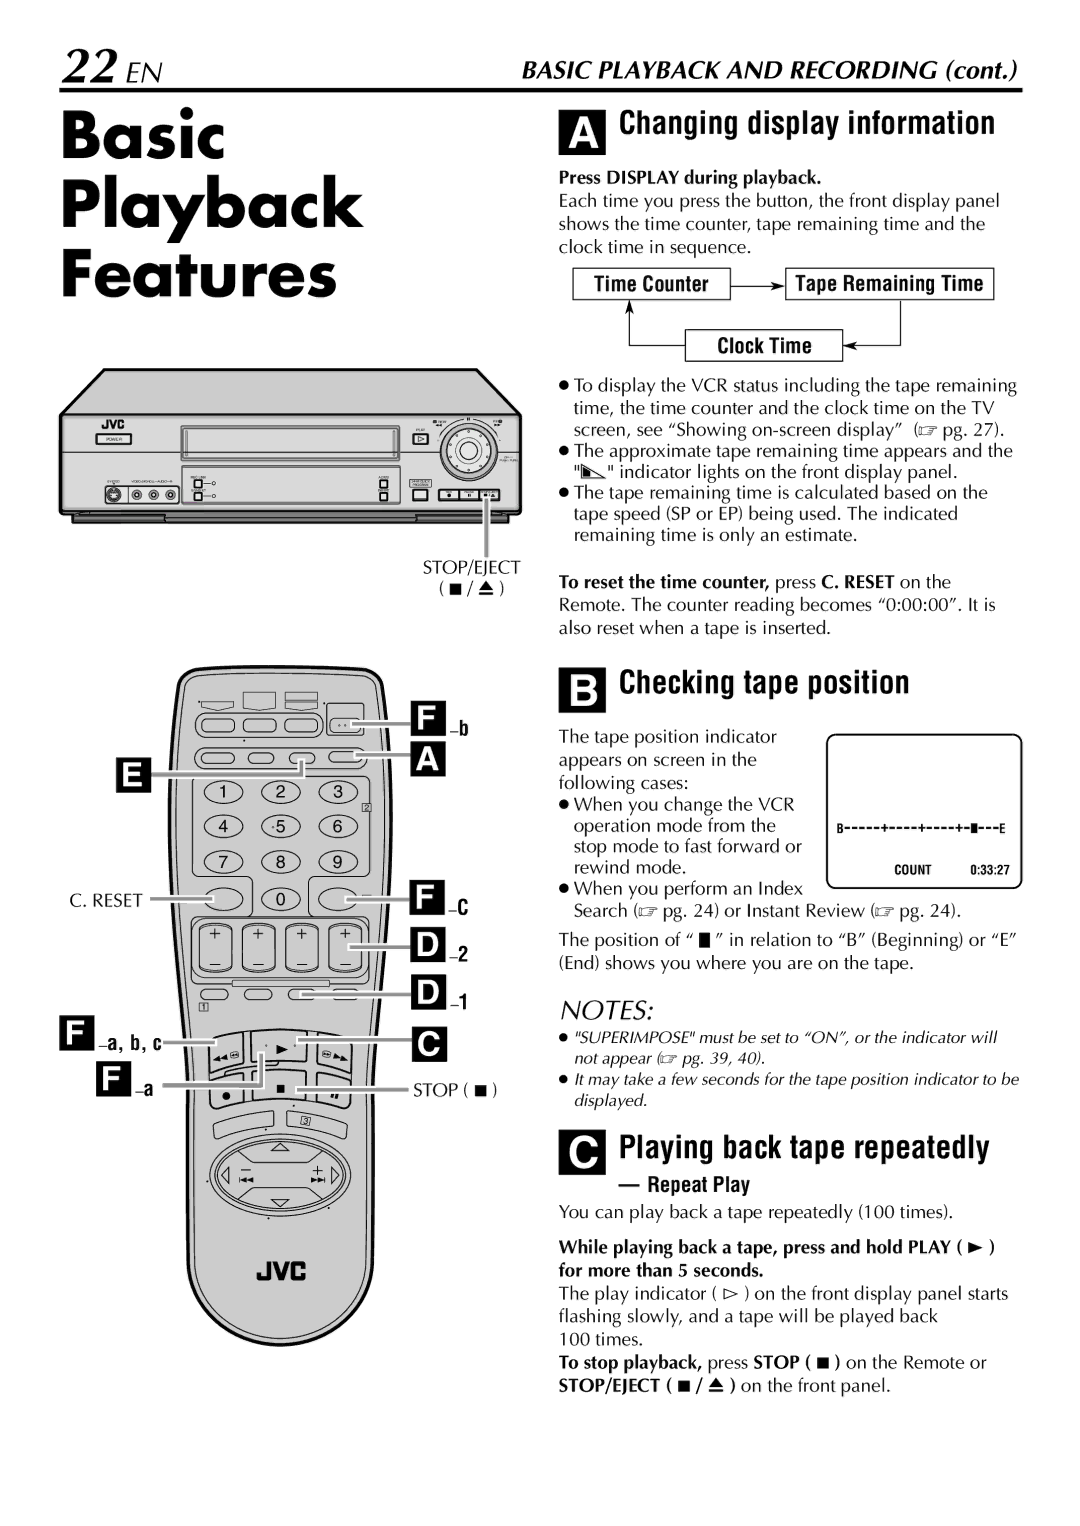 JVC HR-S5900U, HR-5910U manual Basic Playback Features, 22 EN, Changing display information, Checking tape position 